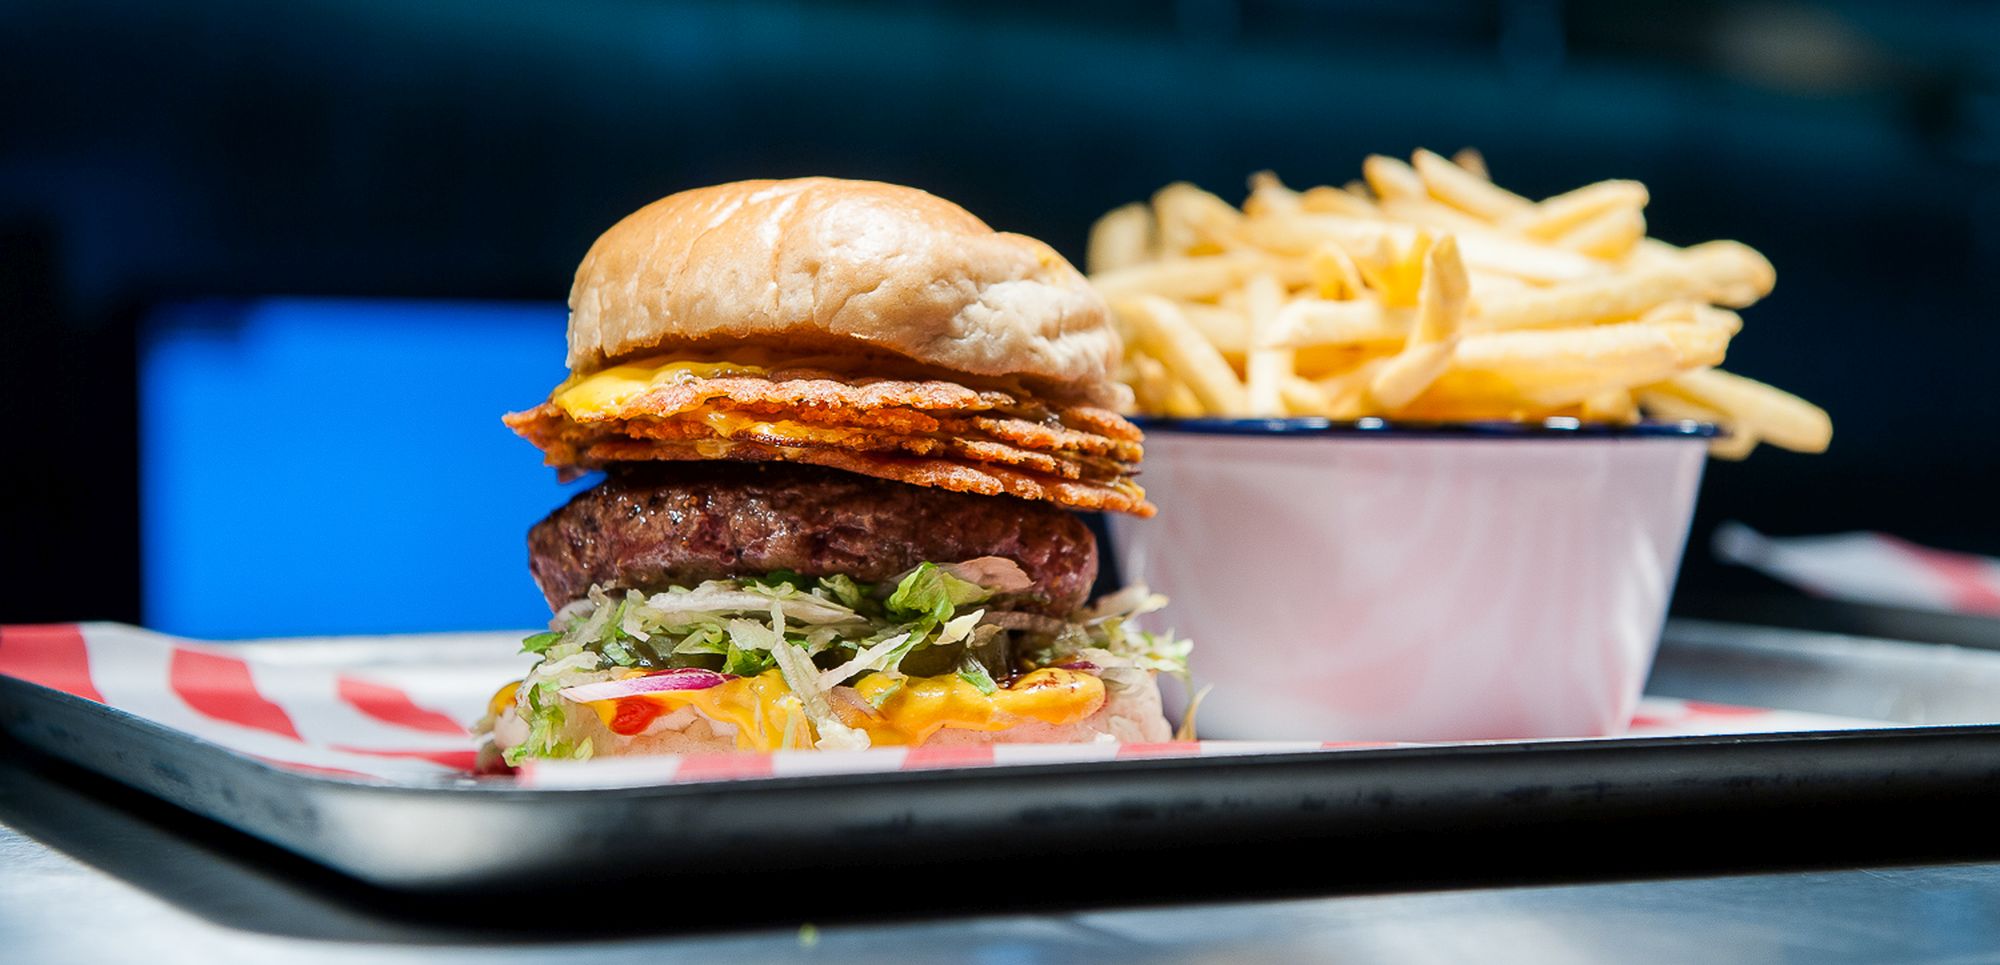 Gourmet junk London burger restaurant Meatliquor has closed its restaurant on Market Row in Brixton, south London